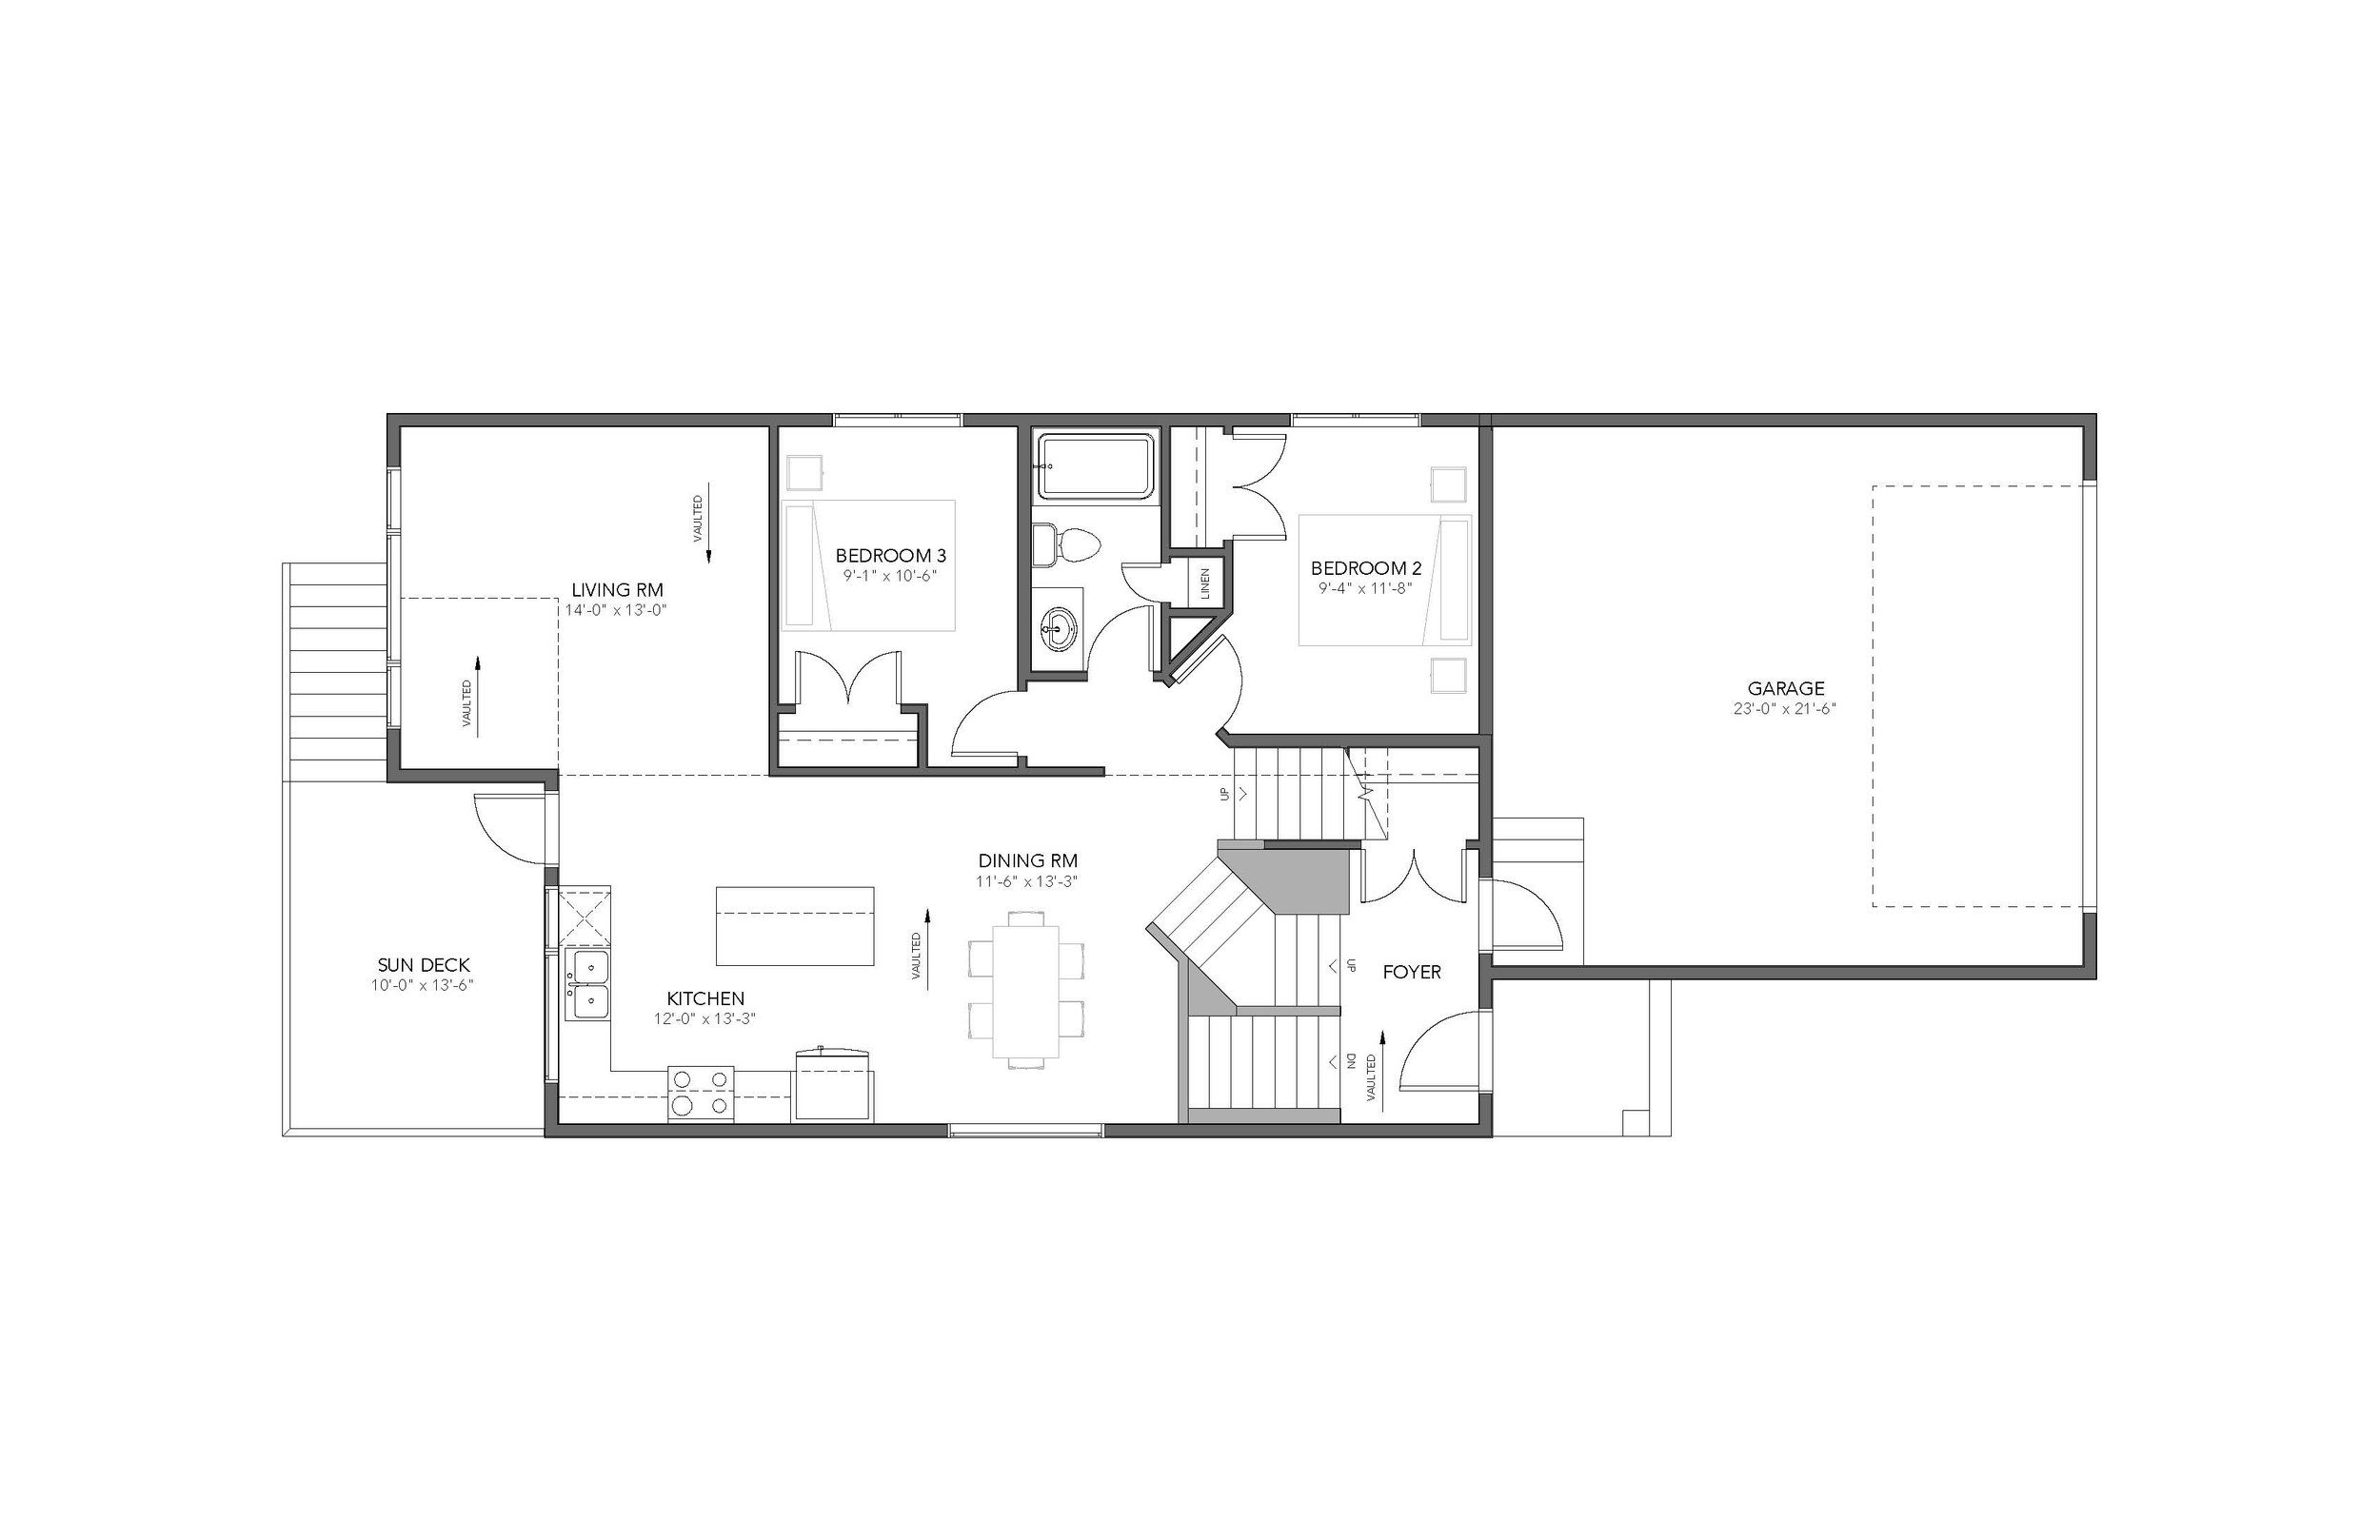 Main Floor Plan (Copy)